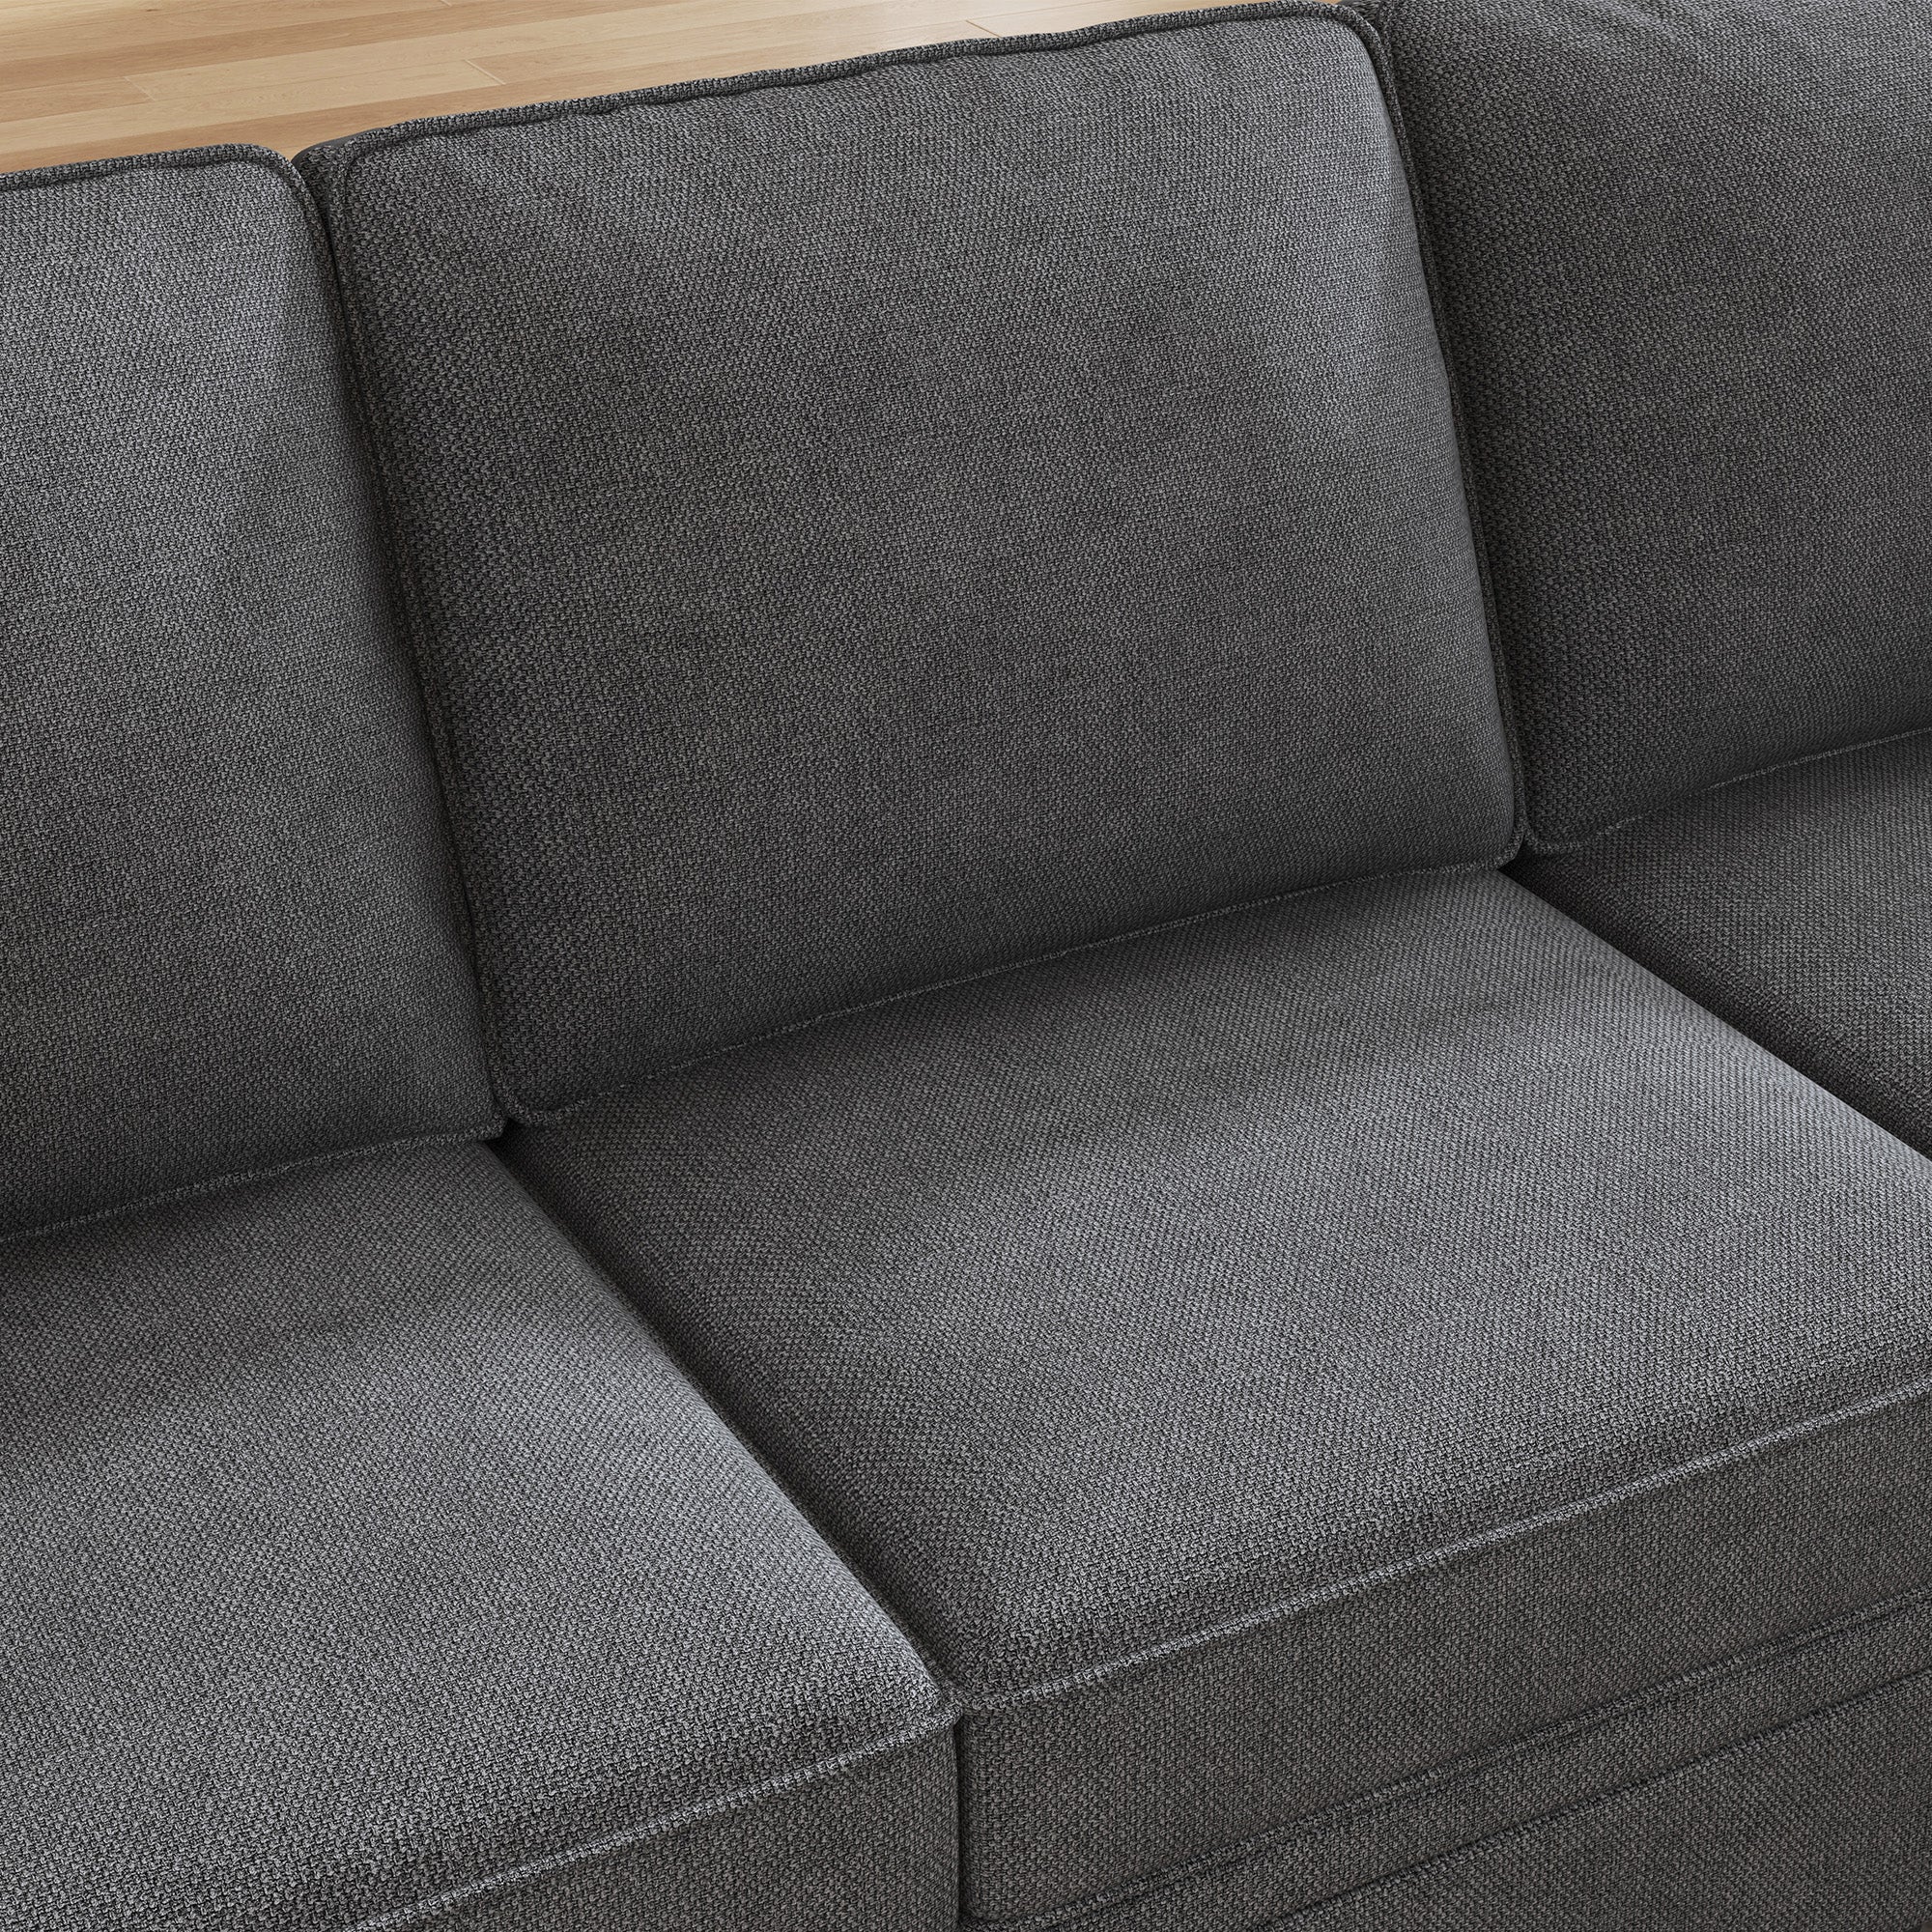 HONBAY 4-Seat Sectional Sofa U-Shaped Sofa with Storage Seat Media#Color_Dark Grey